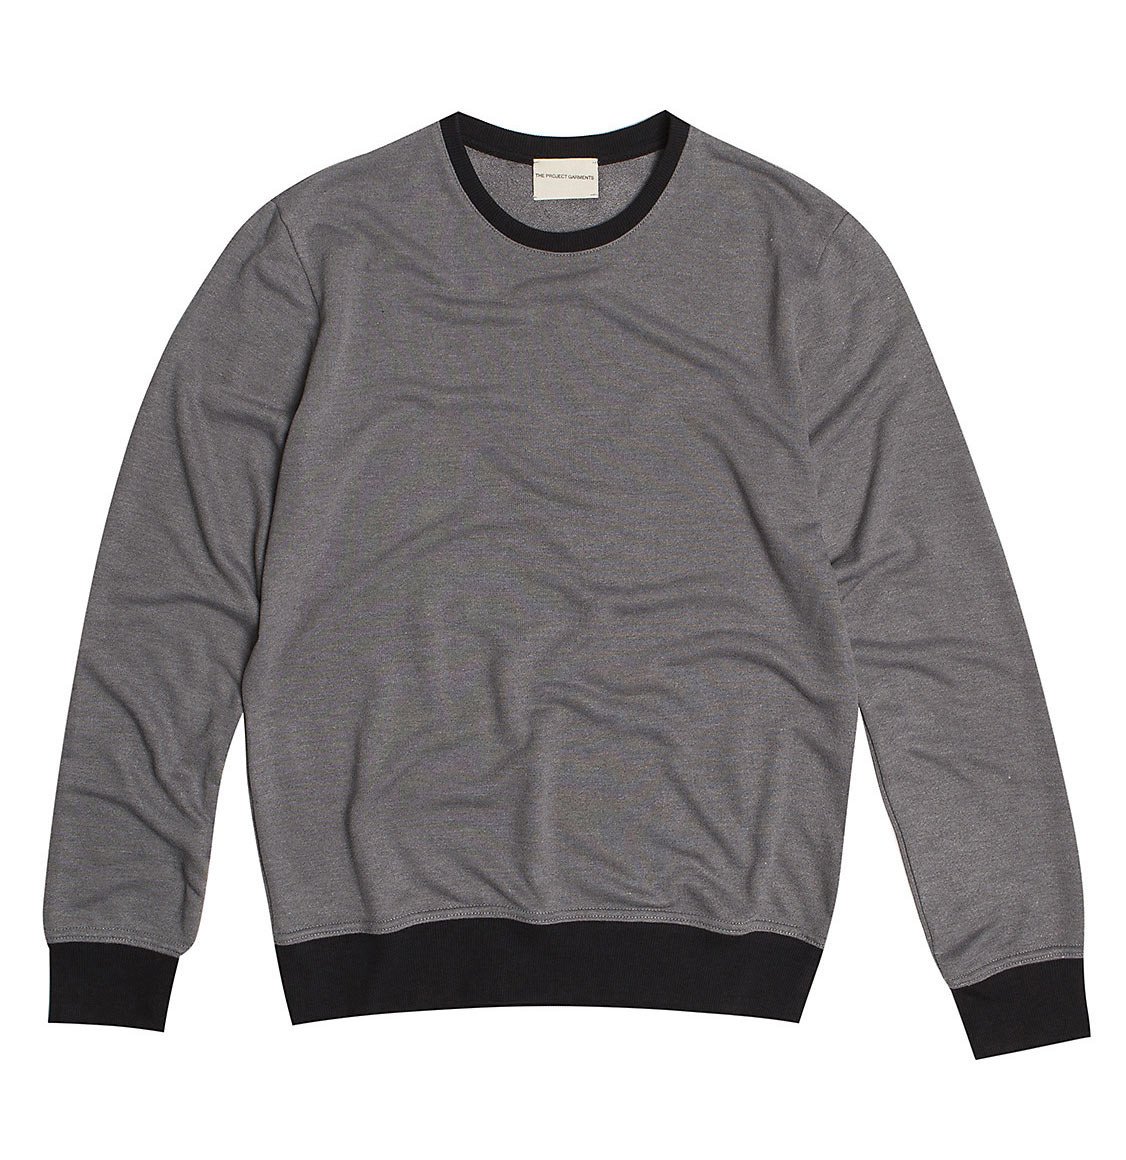 cotton_blend_lightweight_sweatshirt_dark_grey_the_project_garments__d